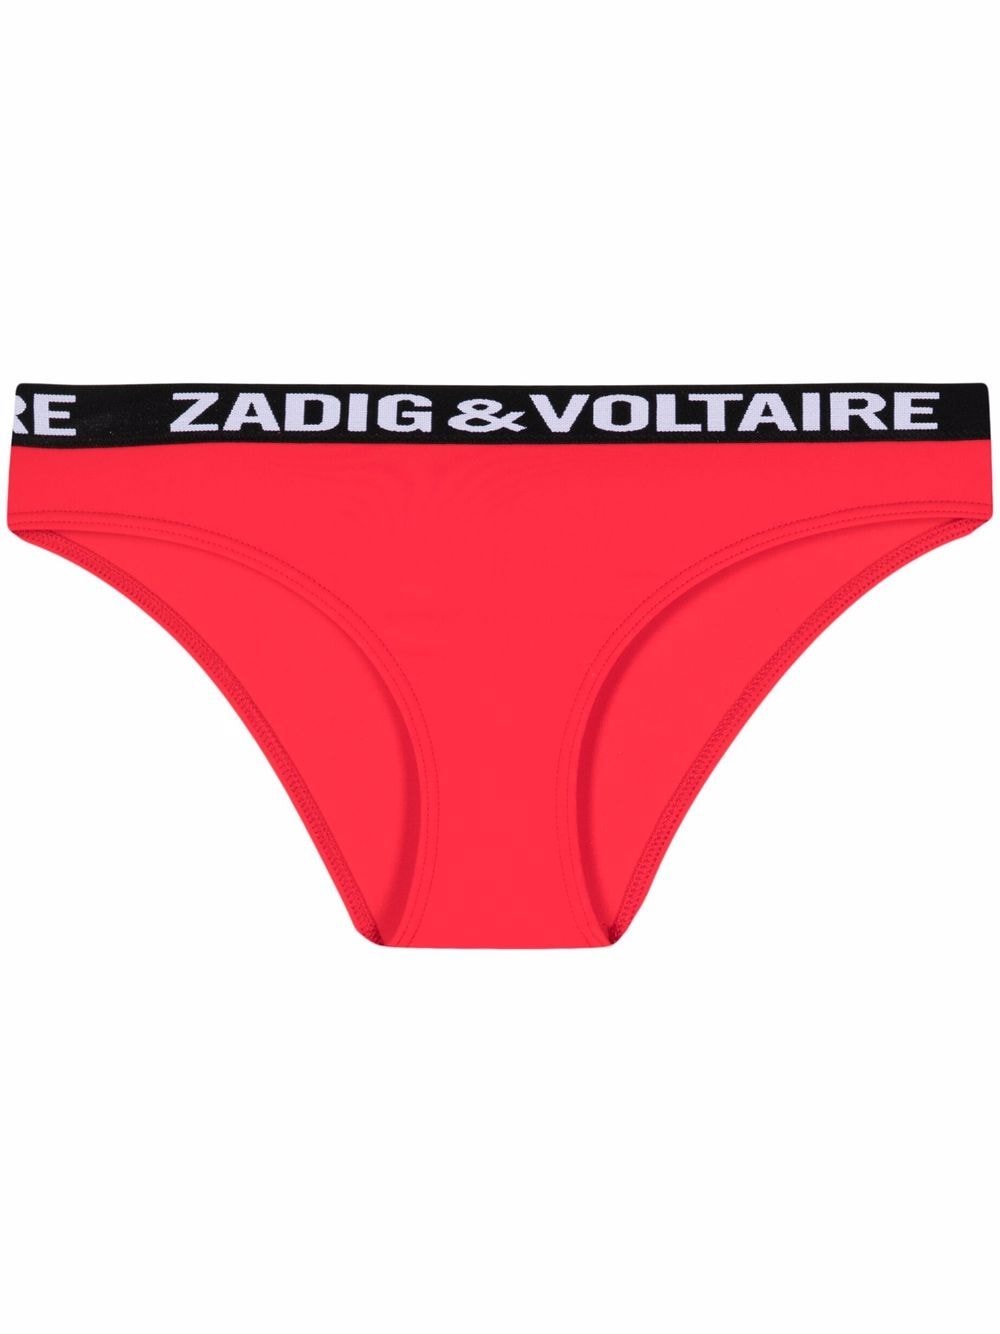 фото Zadig&voltaire плавки бикини с логотипом на поясе